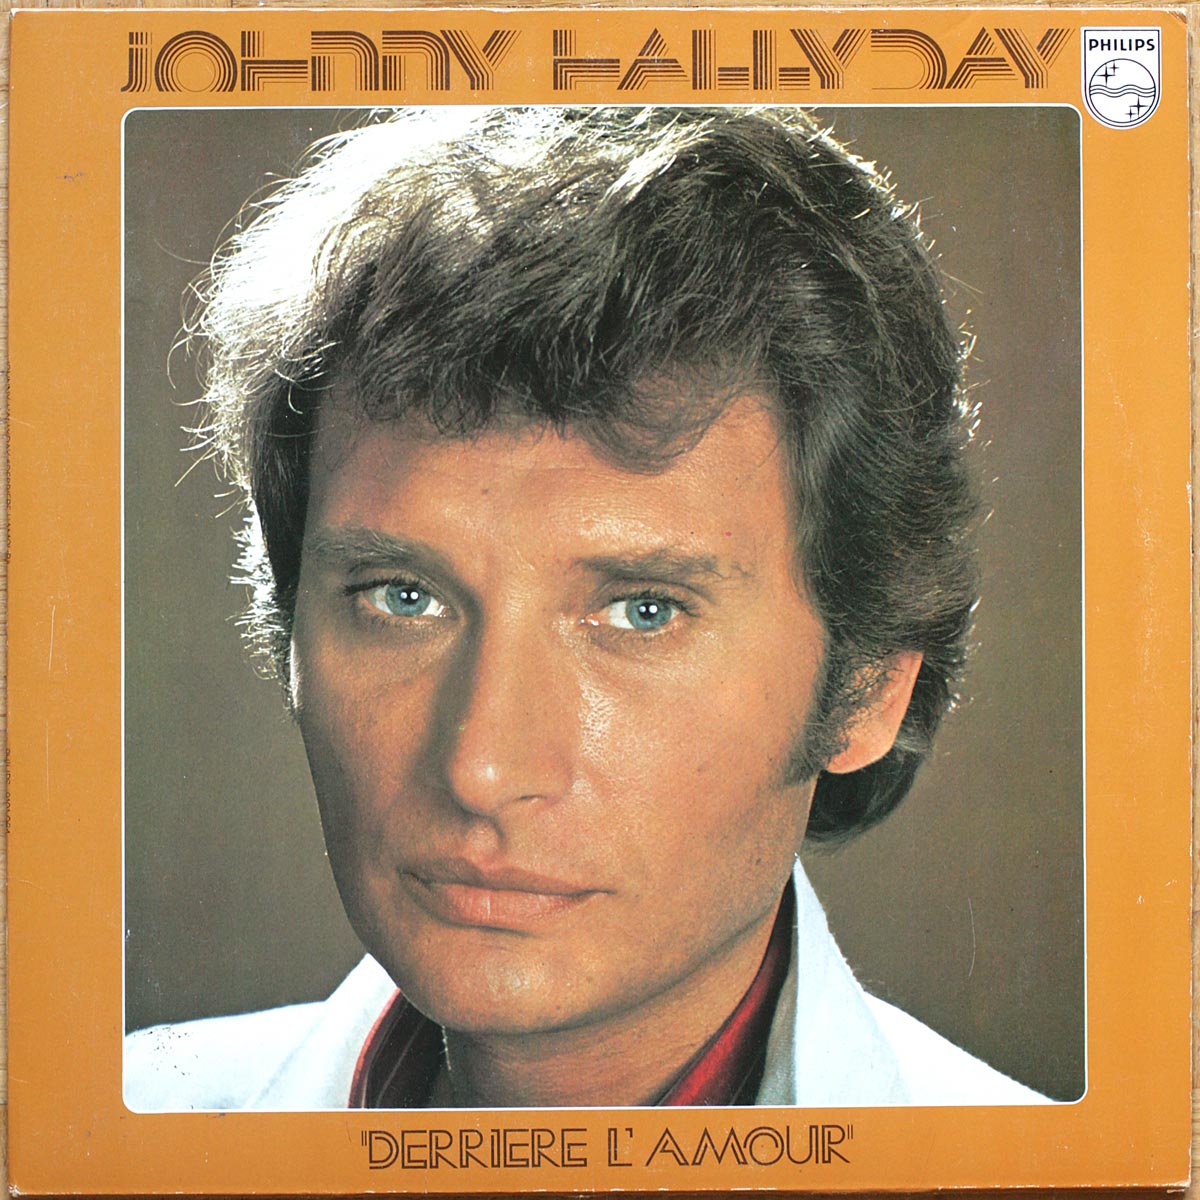 Johnny Hallyday • Derrière l'amour • Philips 9101 064